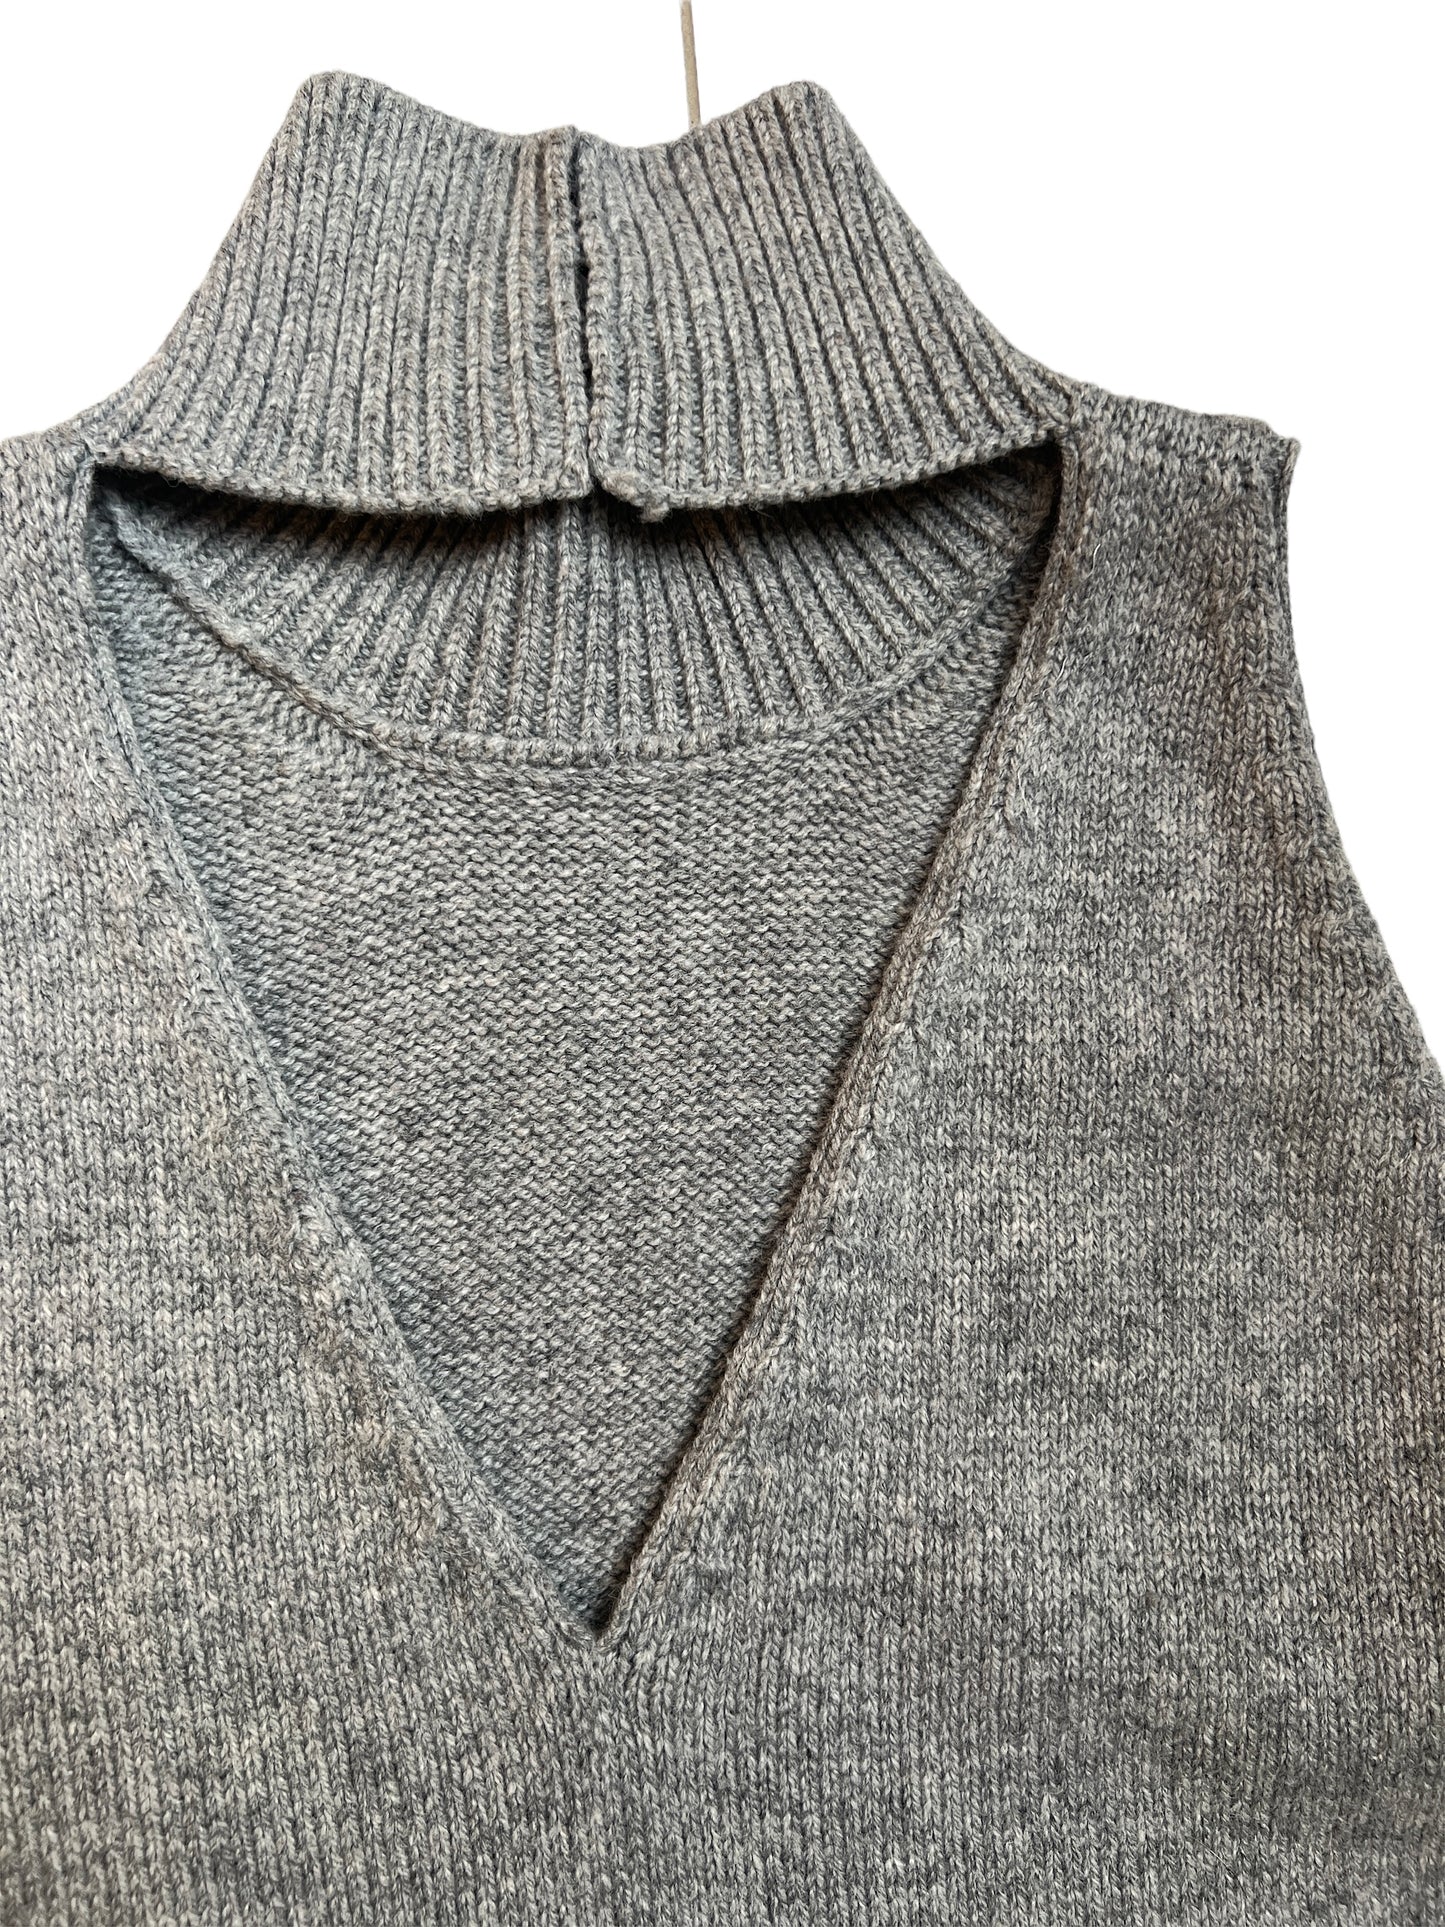 Sleeveless Sweater Top - M